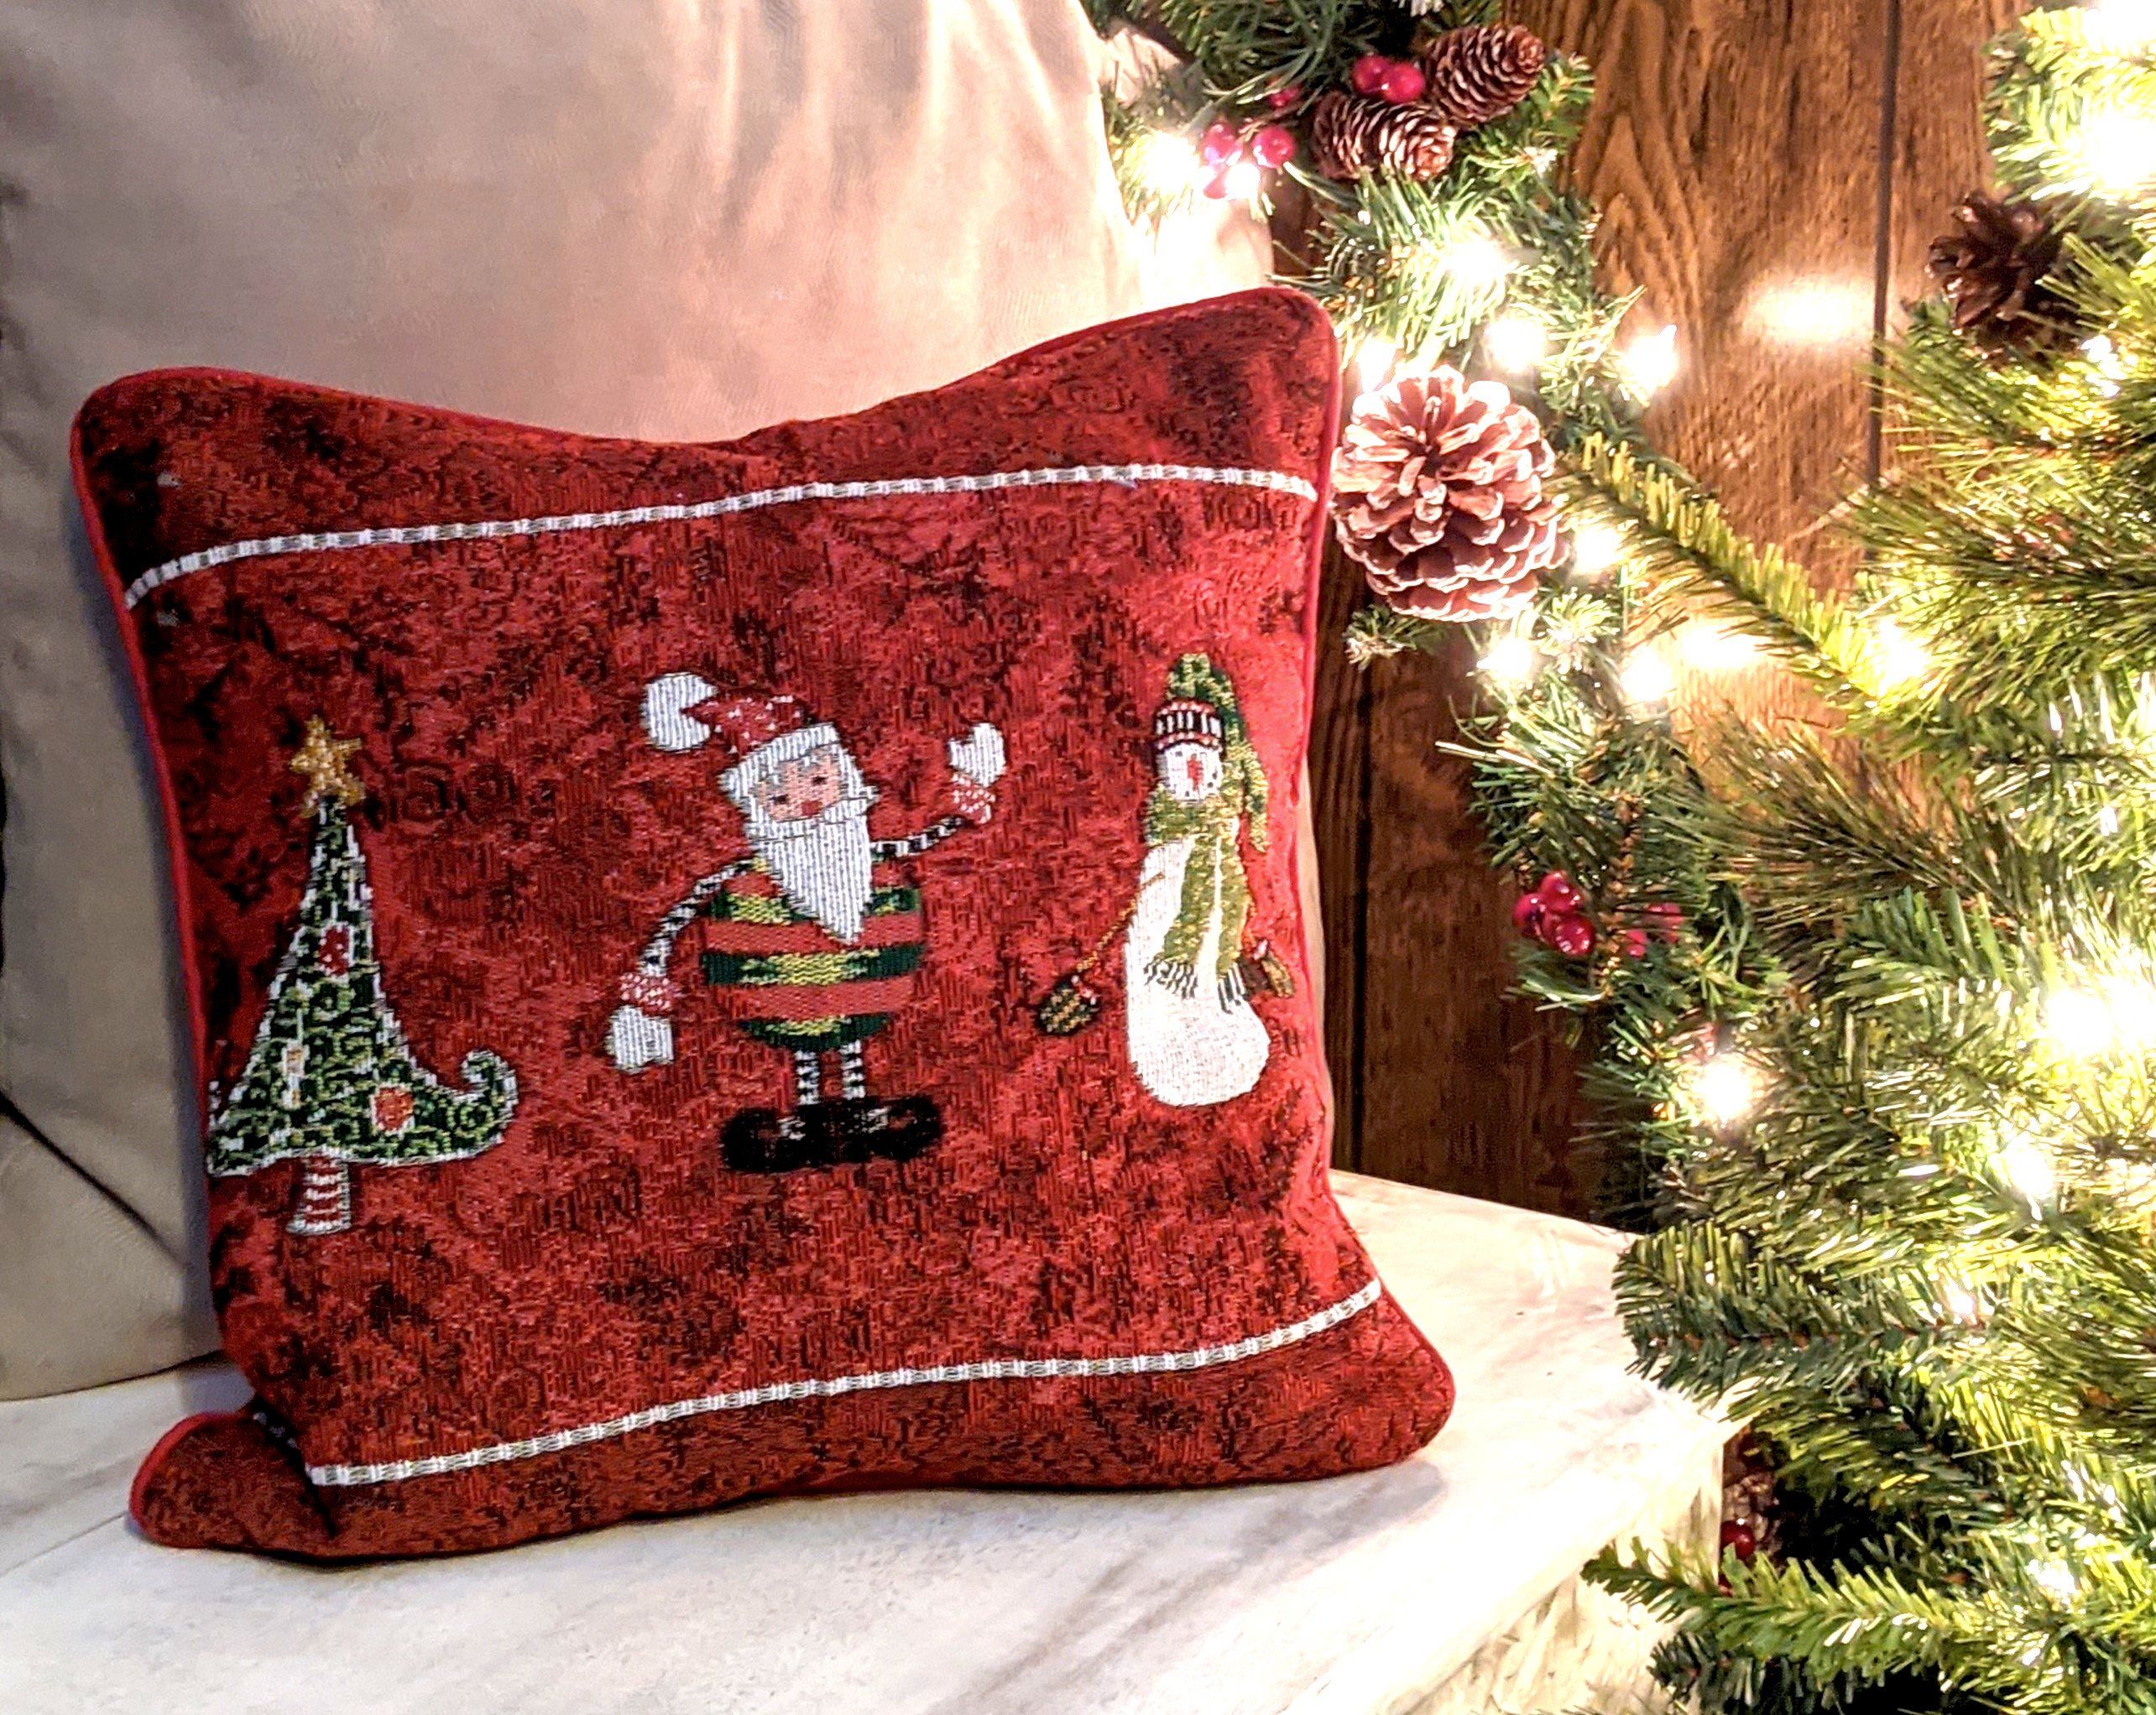 Christmas Throw Pillow Cover, Mittens, Mashmallows, Snowballs